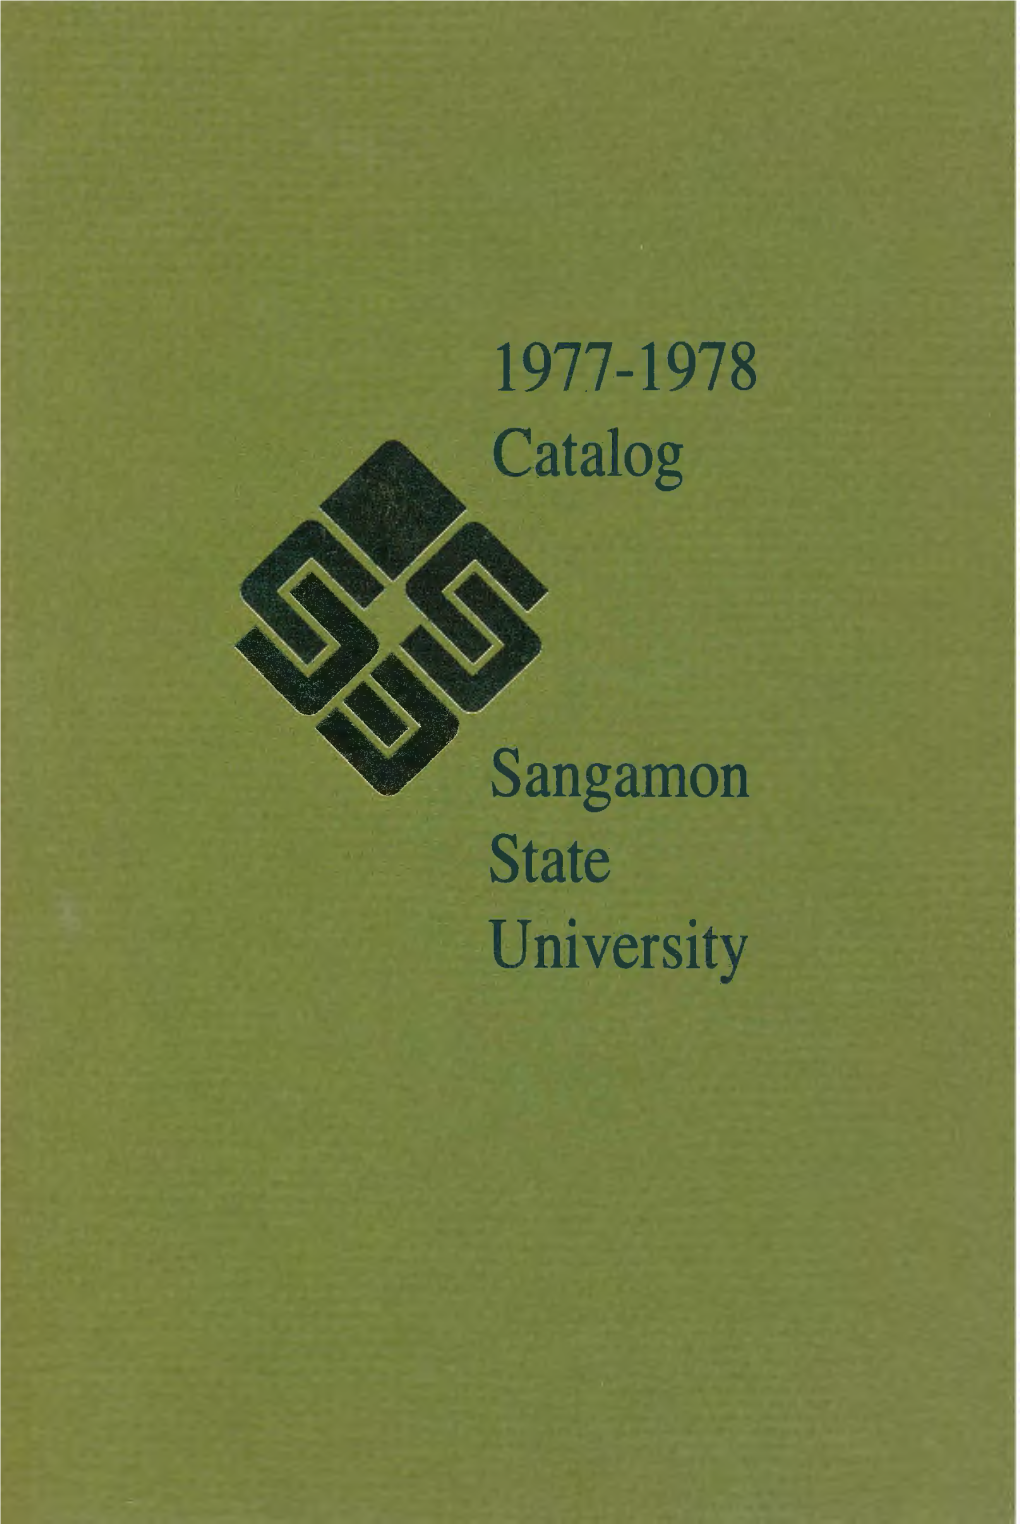 1977-1978 Catalog Sang Am on State University